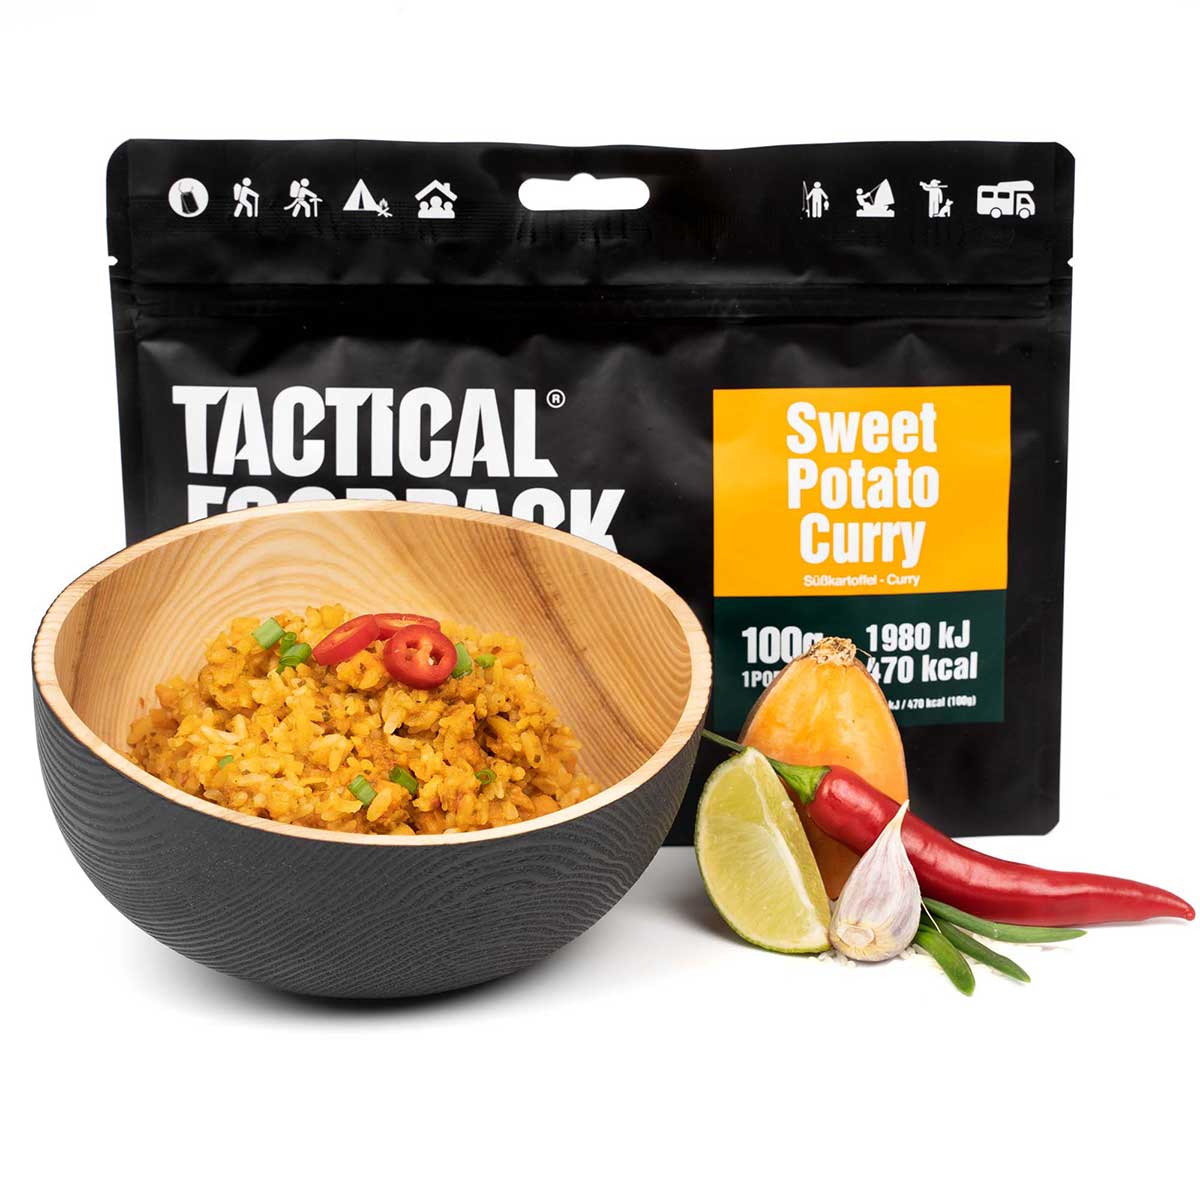 Сублімовані продукти Tactical Foodpack - Ямс каррі 100 г